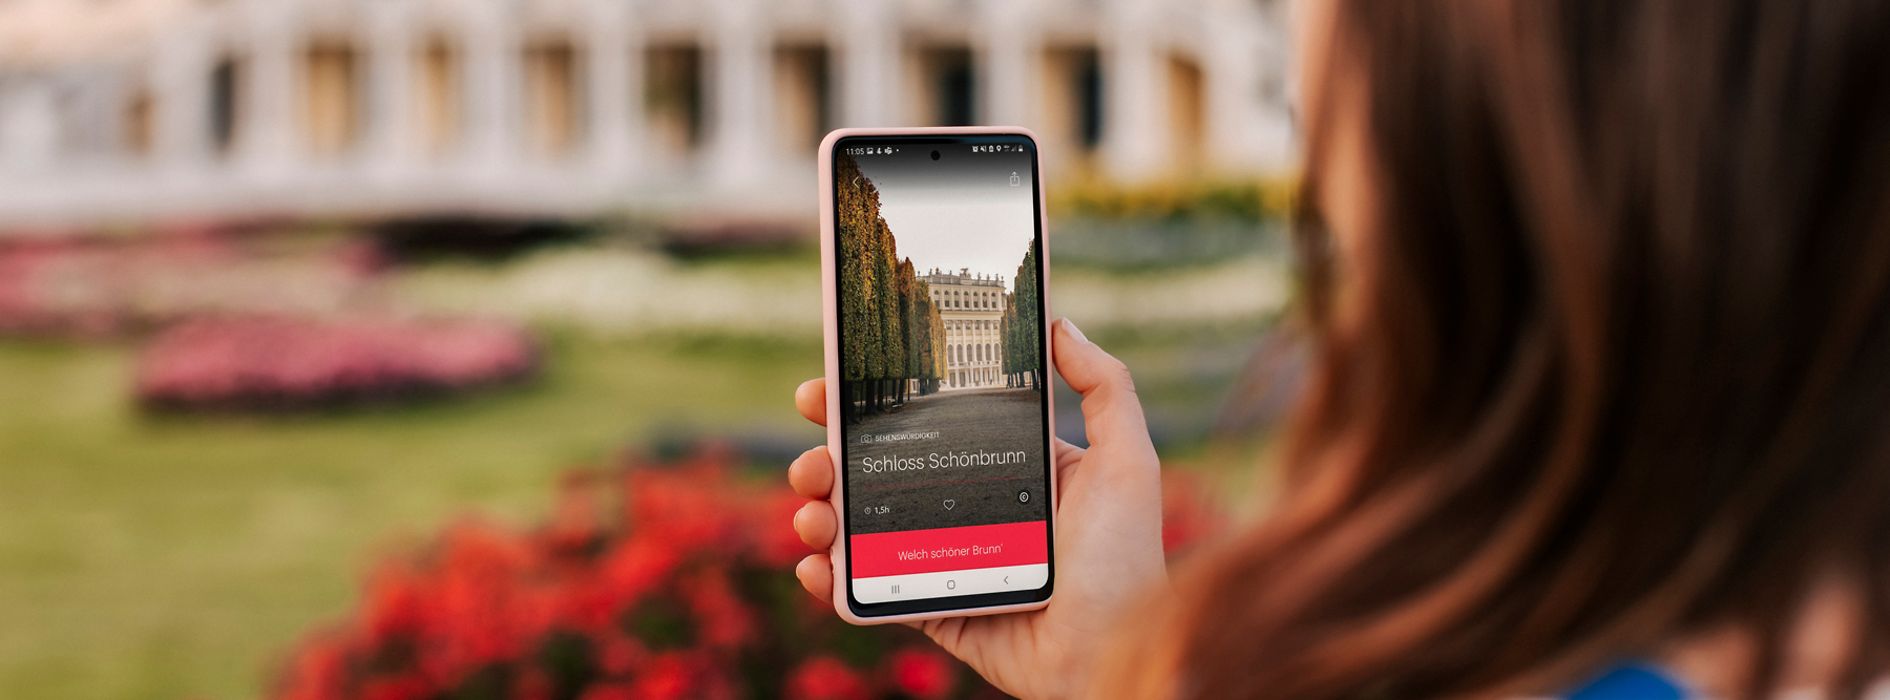 ivie app, mobile phone, Schönbrunn